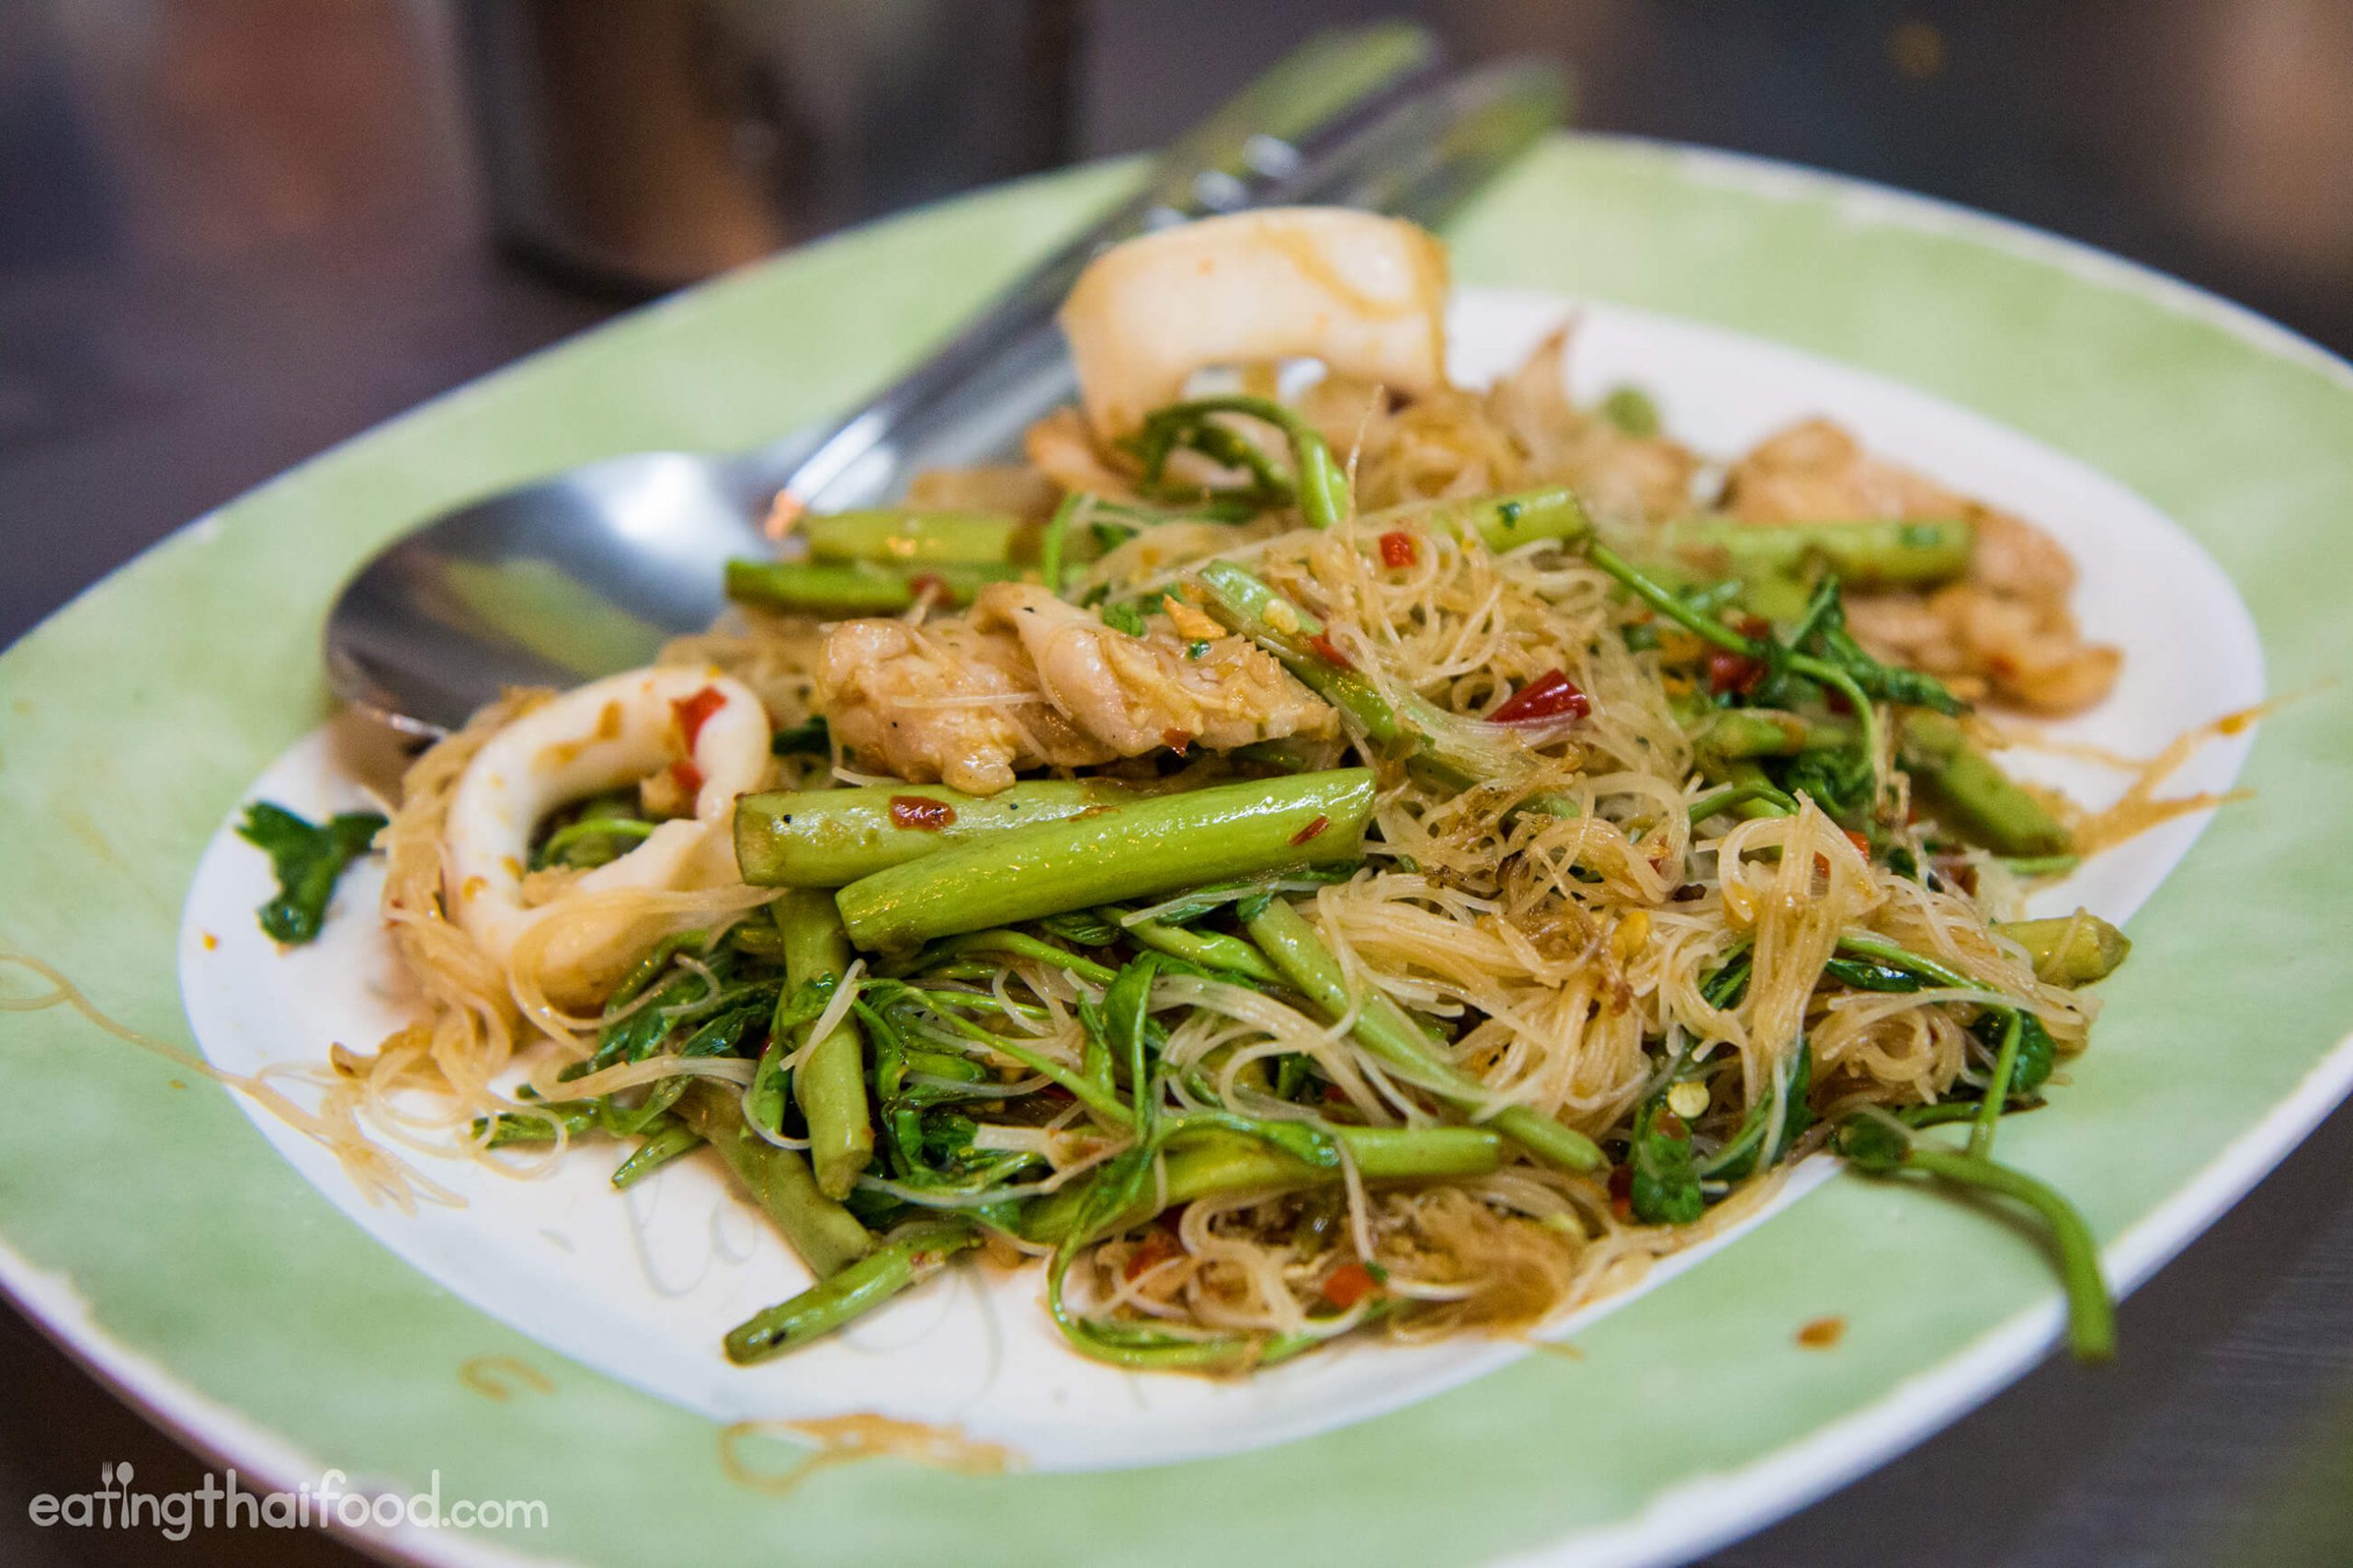 Try the Water Mimosa Noodles at Saw Nah Wang (ร้าน ส.หน้าวัง)